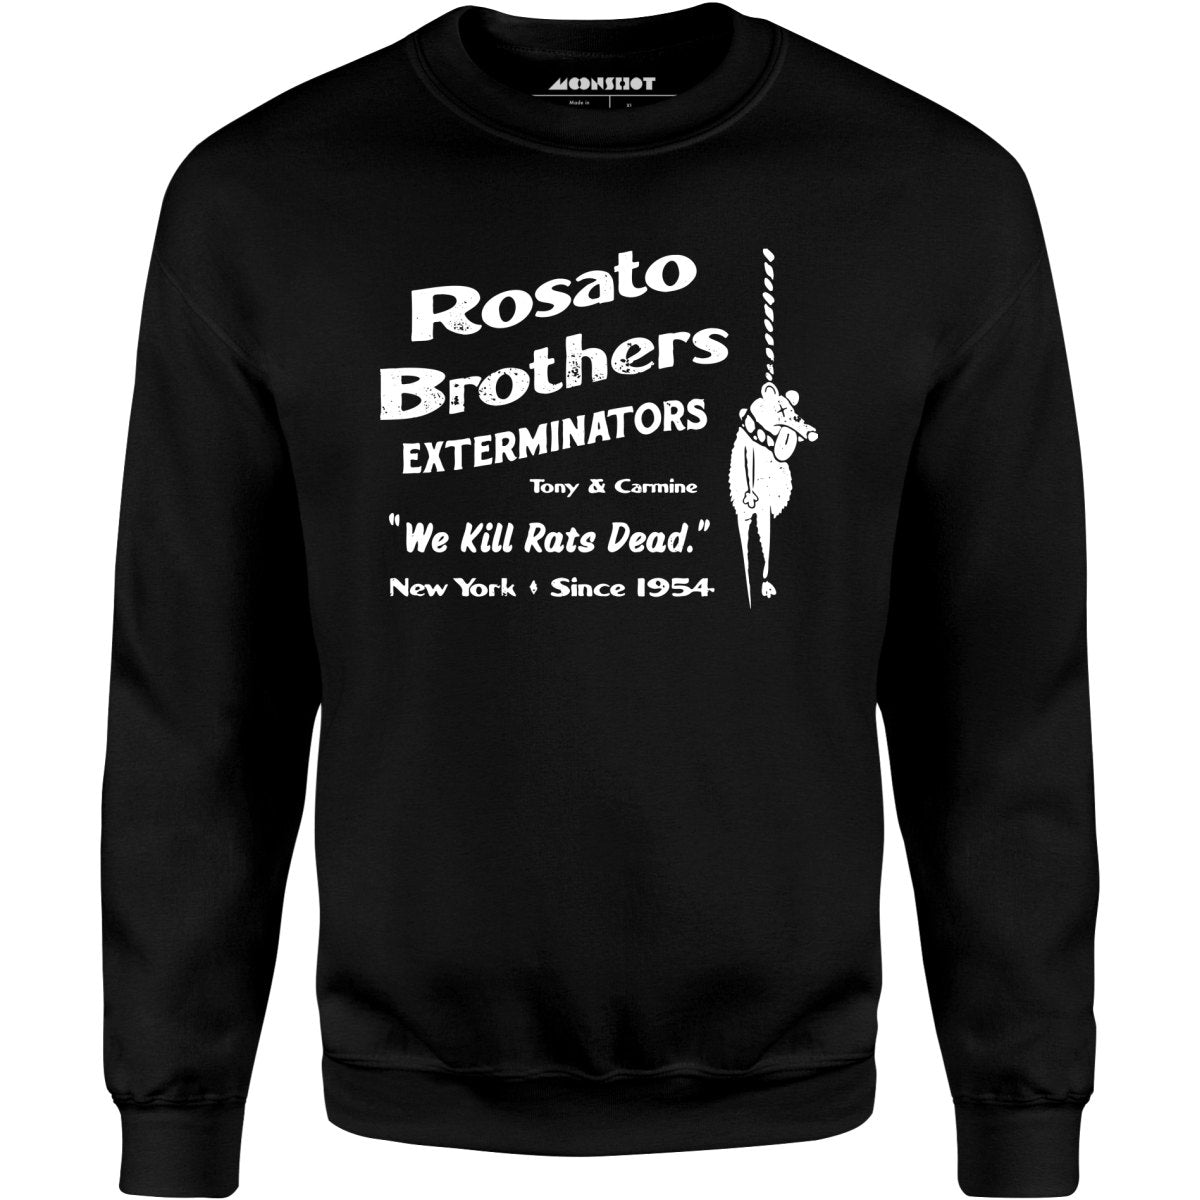 Rosato Brothers Exterminators - Unisex Sweatshirt